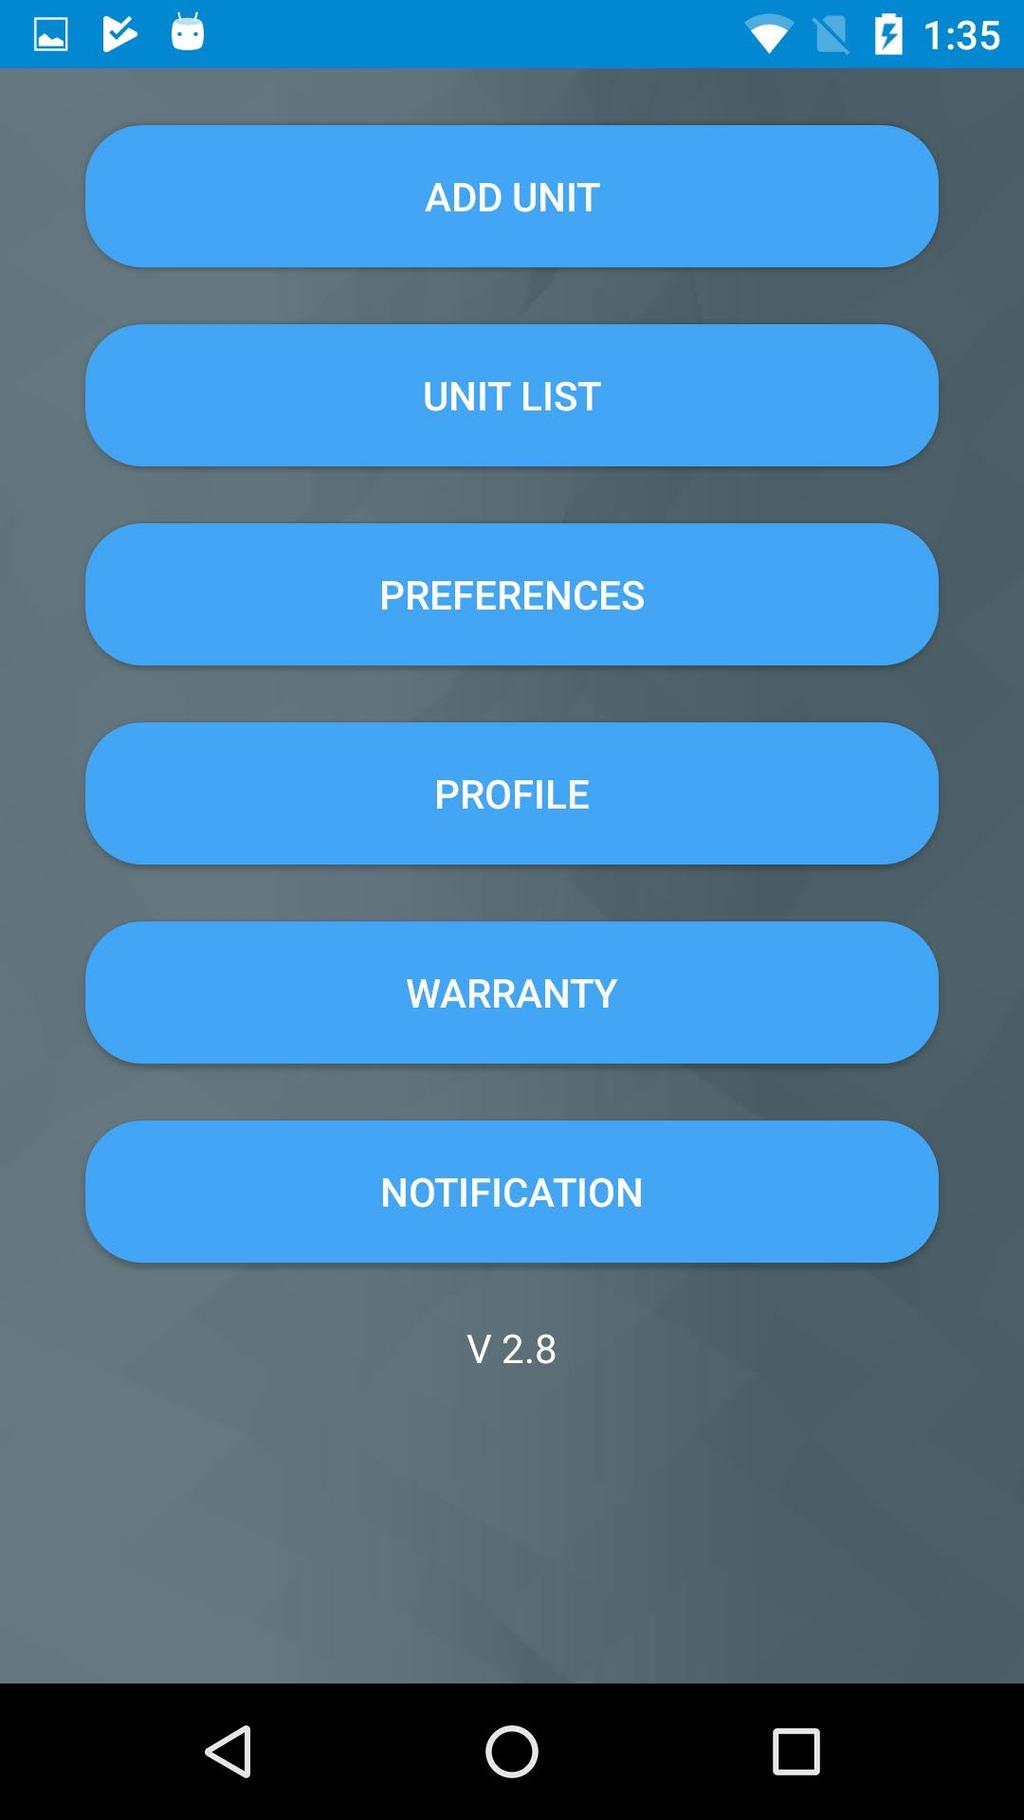 Preferences: Configures your unit s and app s preferences.